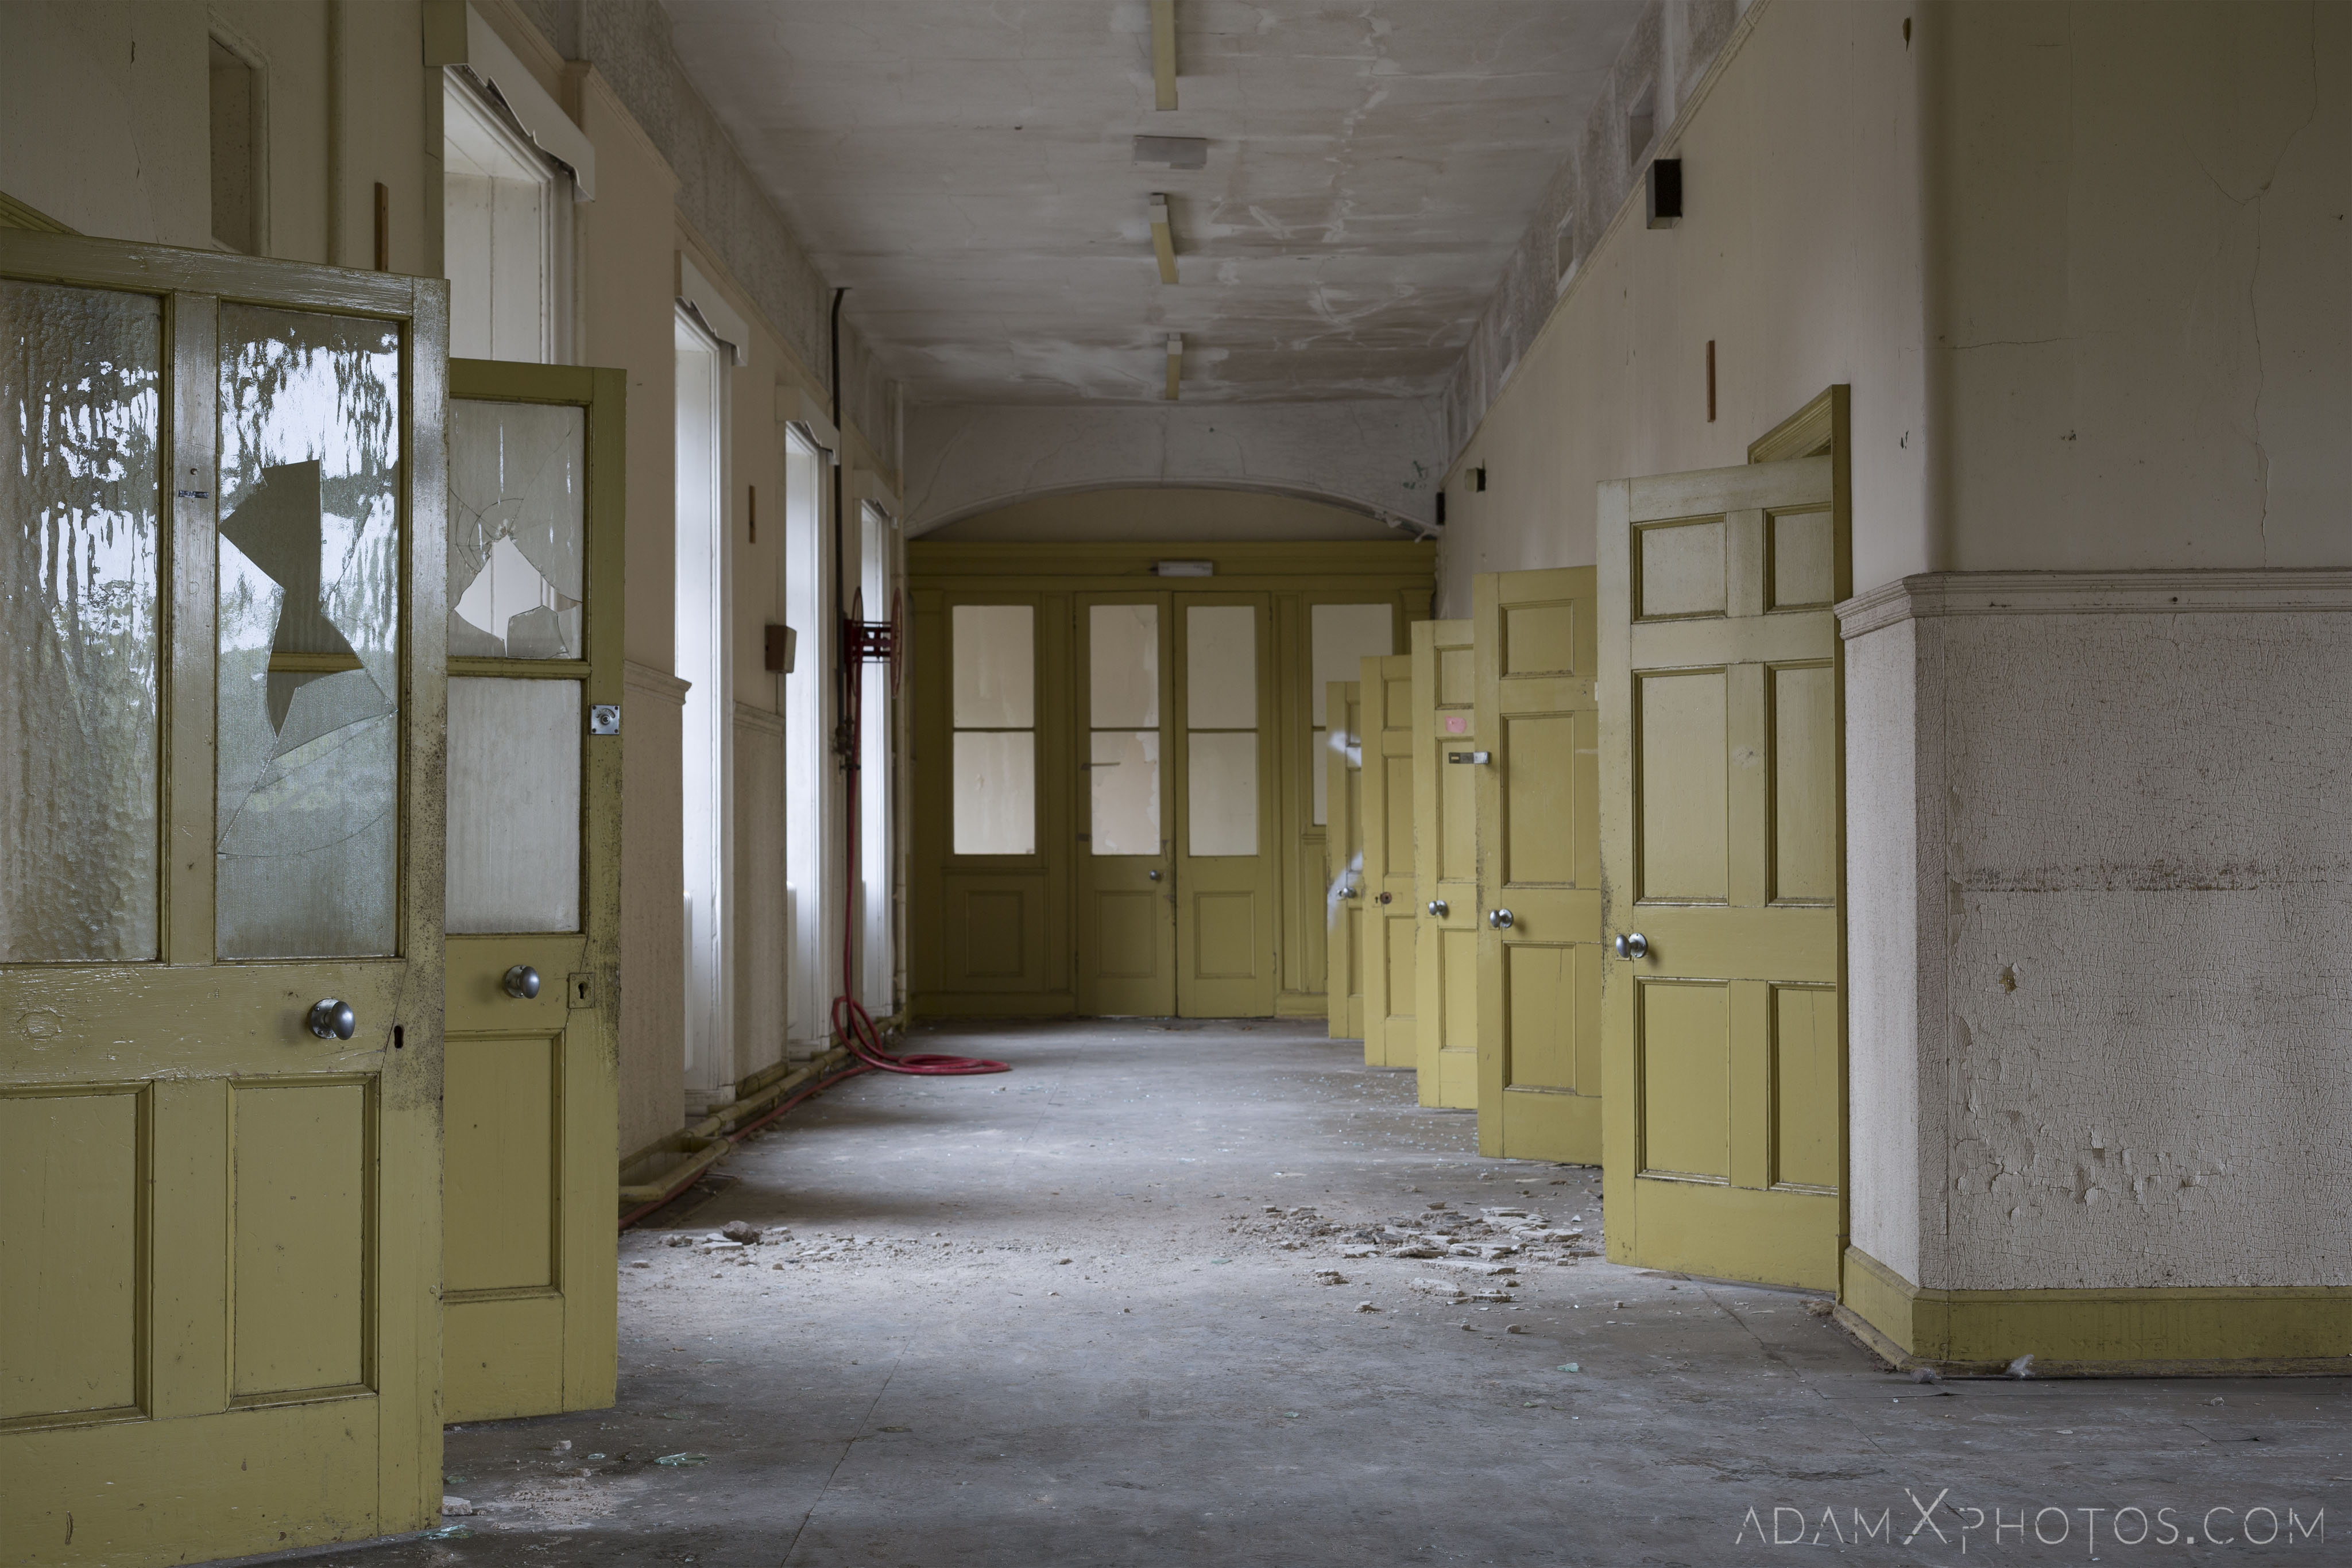 Corridor Sunnyside Royal Hospital Montrose Scotland Adam X Urbex Urban Exploration Access 2018 Abandoned decay ruins lost forgotten derelict location creepy haunting eerie